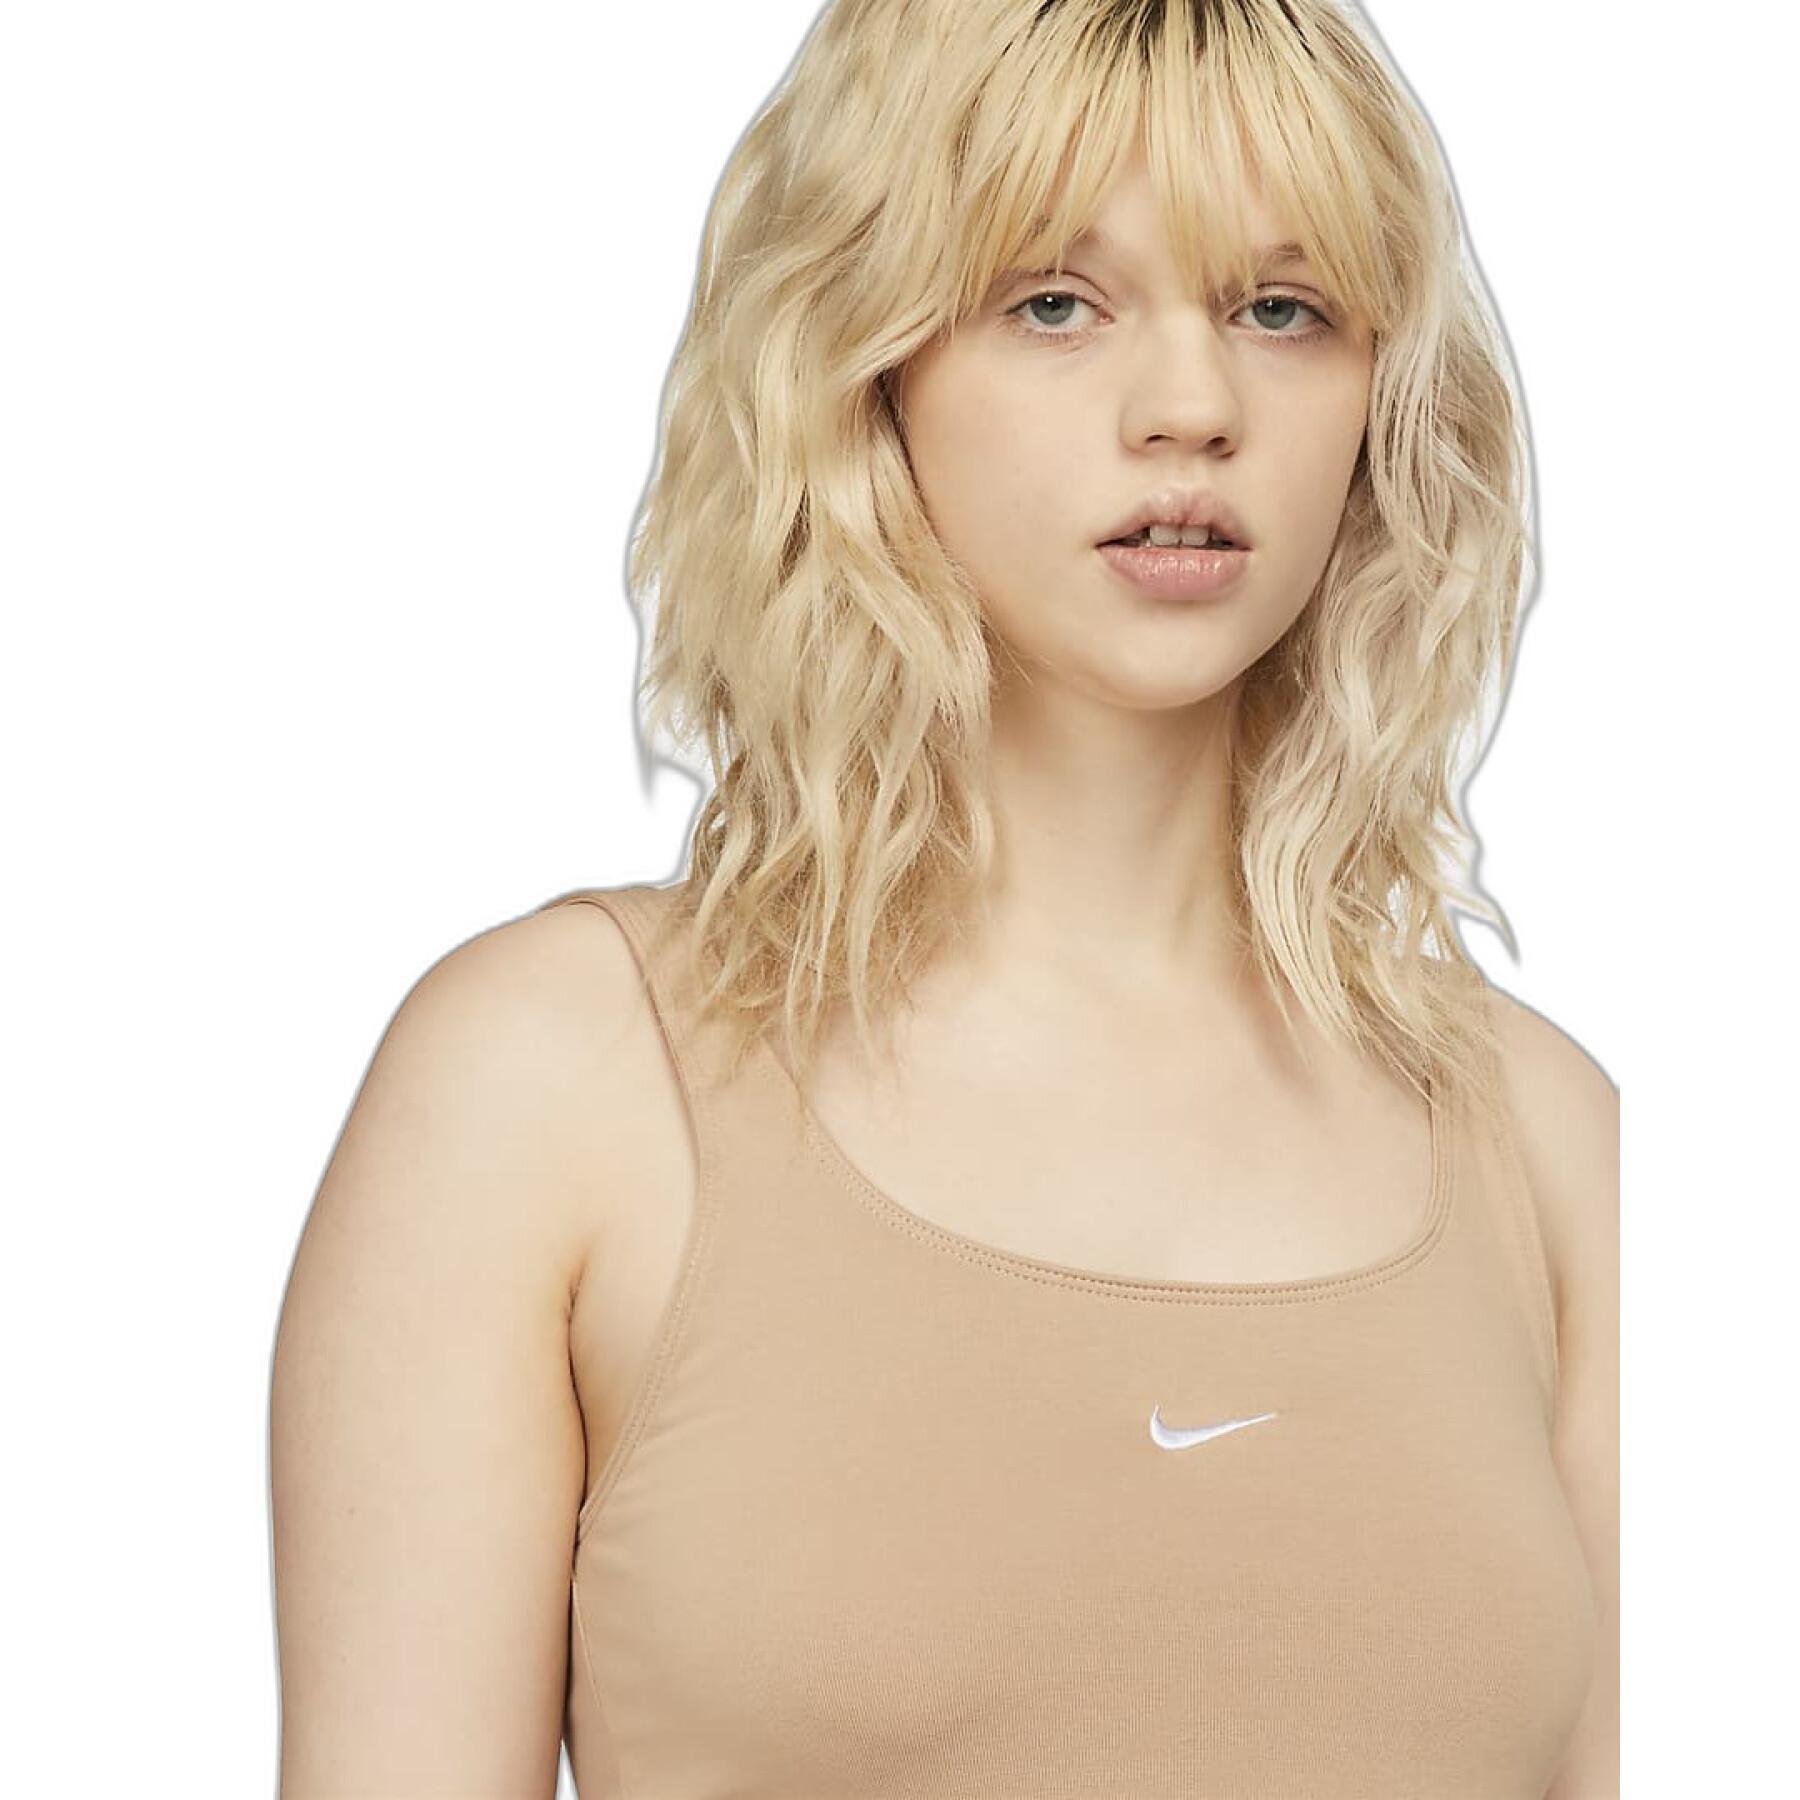 Women's tank top Nike Sportswear Essential Cami